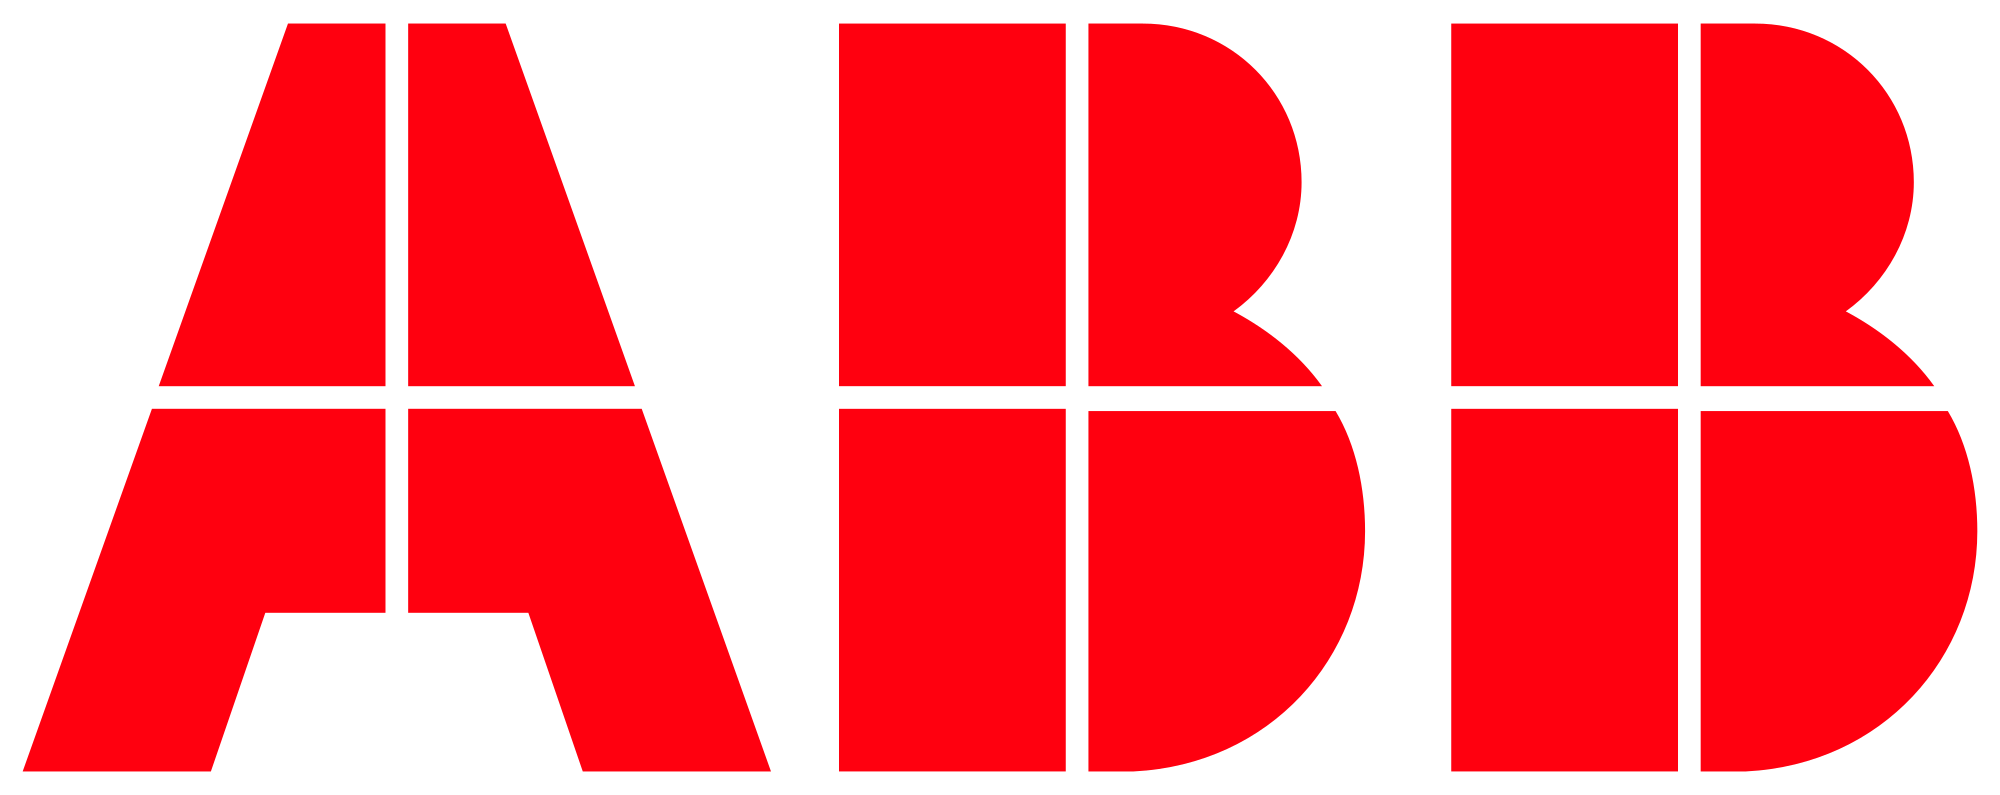 ABB Logo - File:ABB logo.svg - Wikimedia Commons